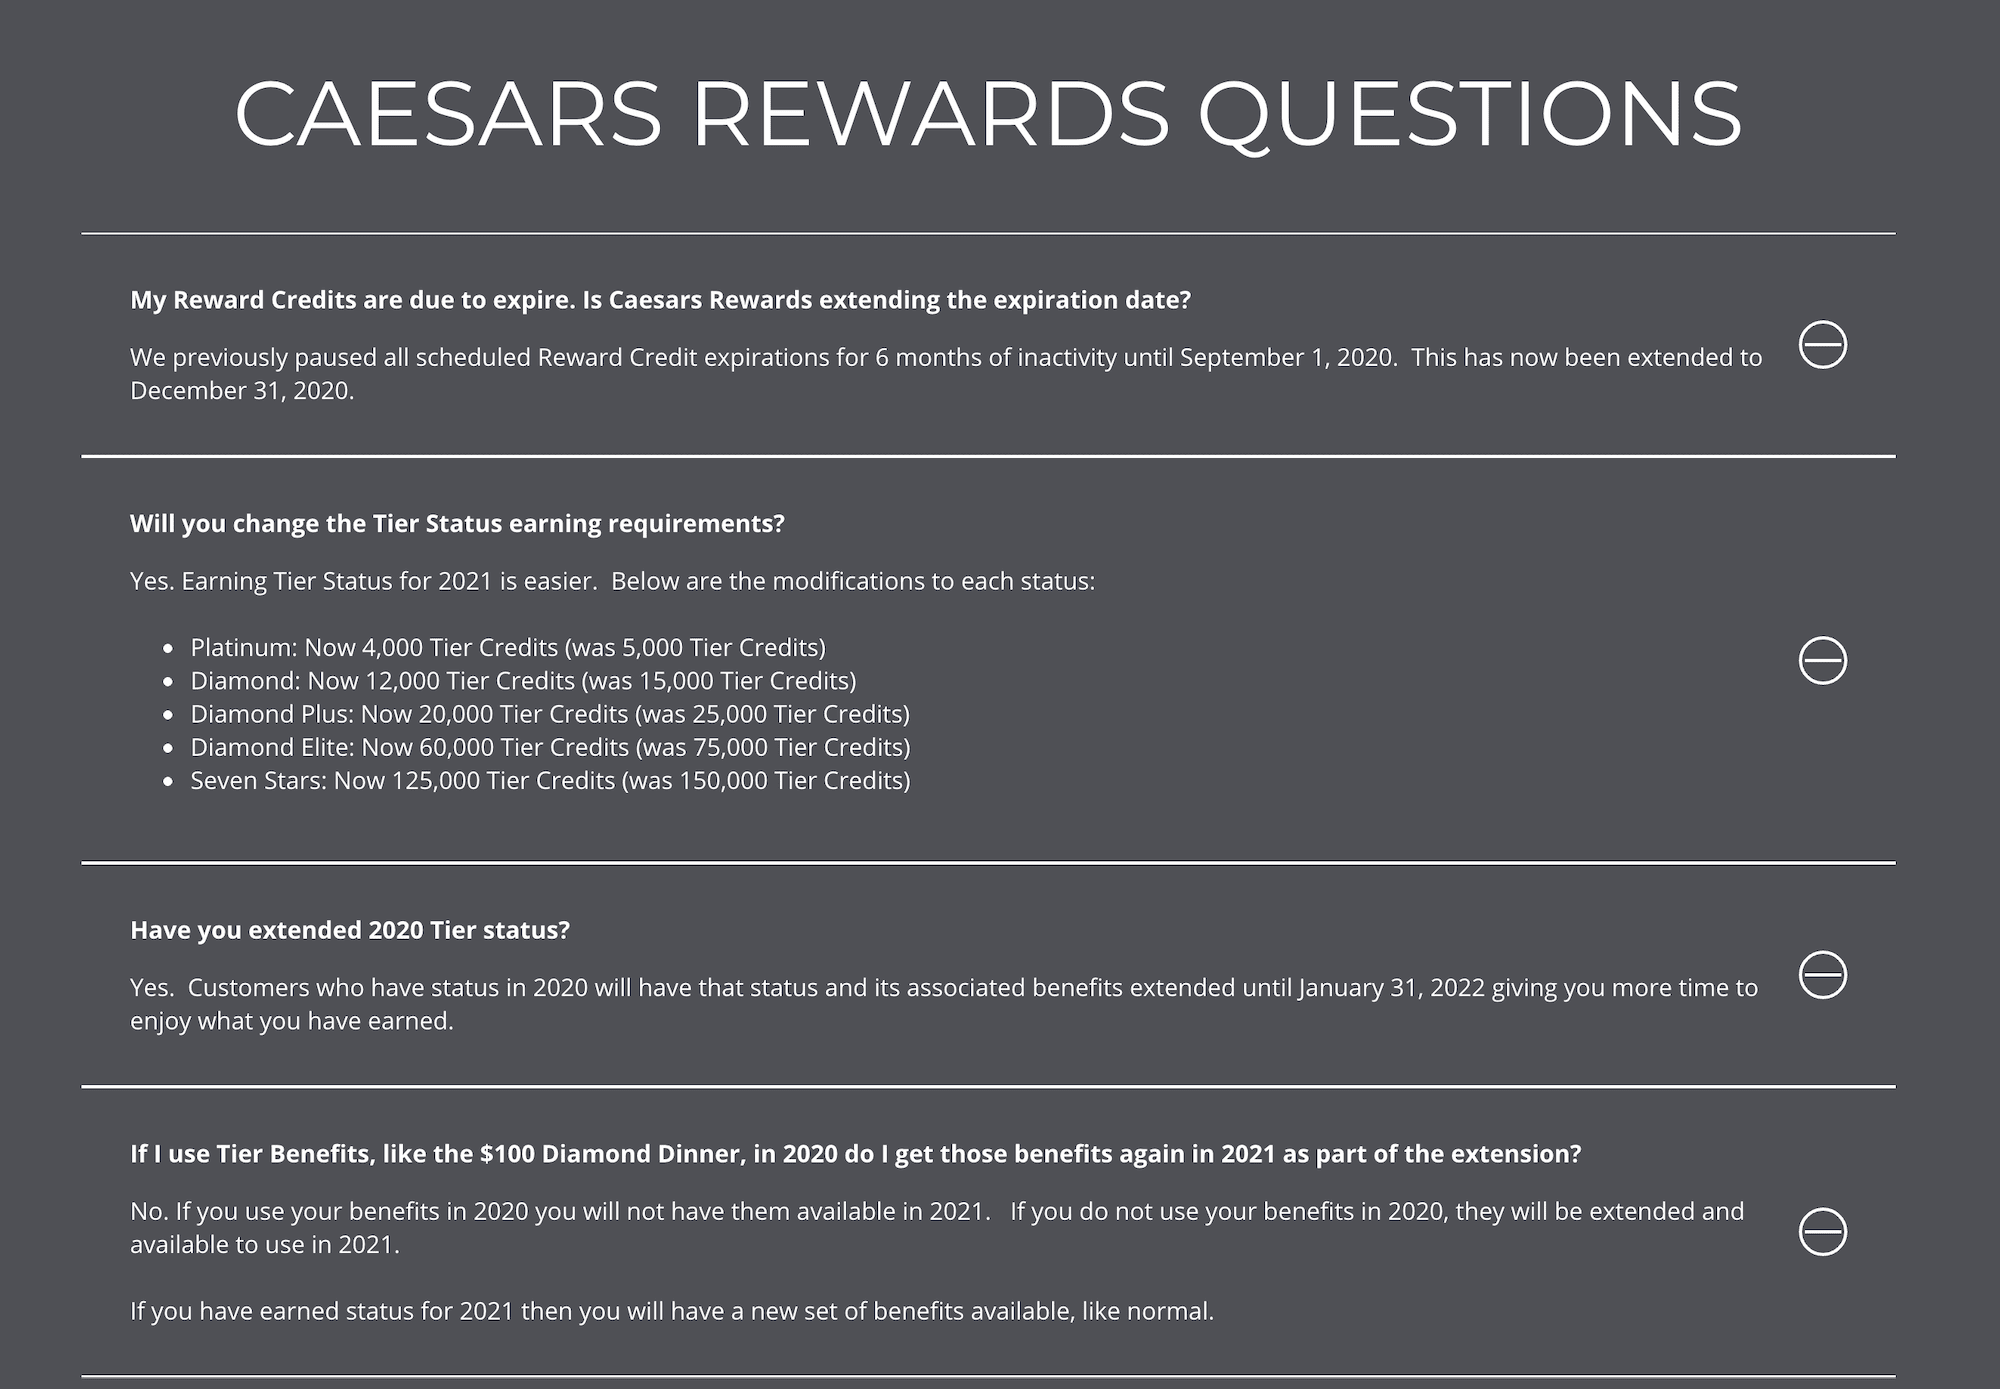 [Some Surprises?] CAESARS REWARDS Extending Tier Status For Most